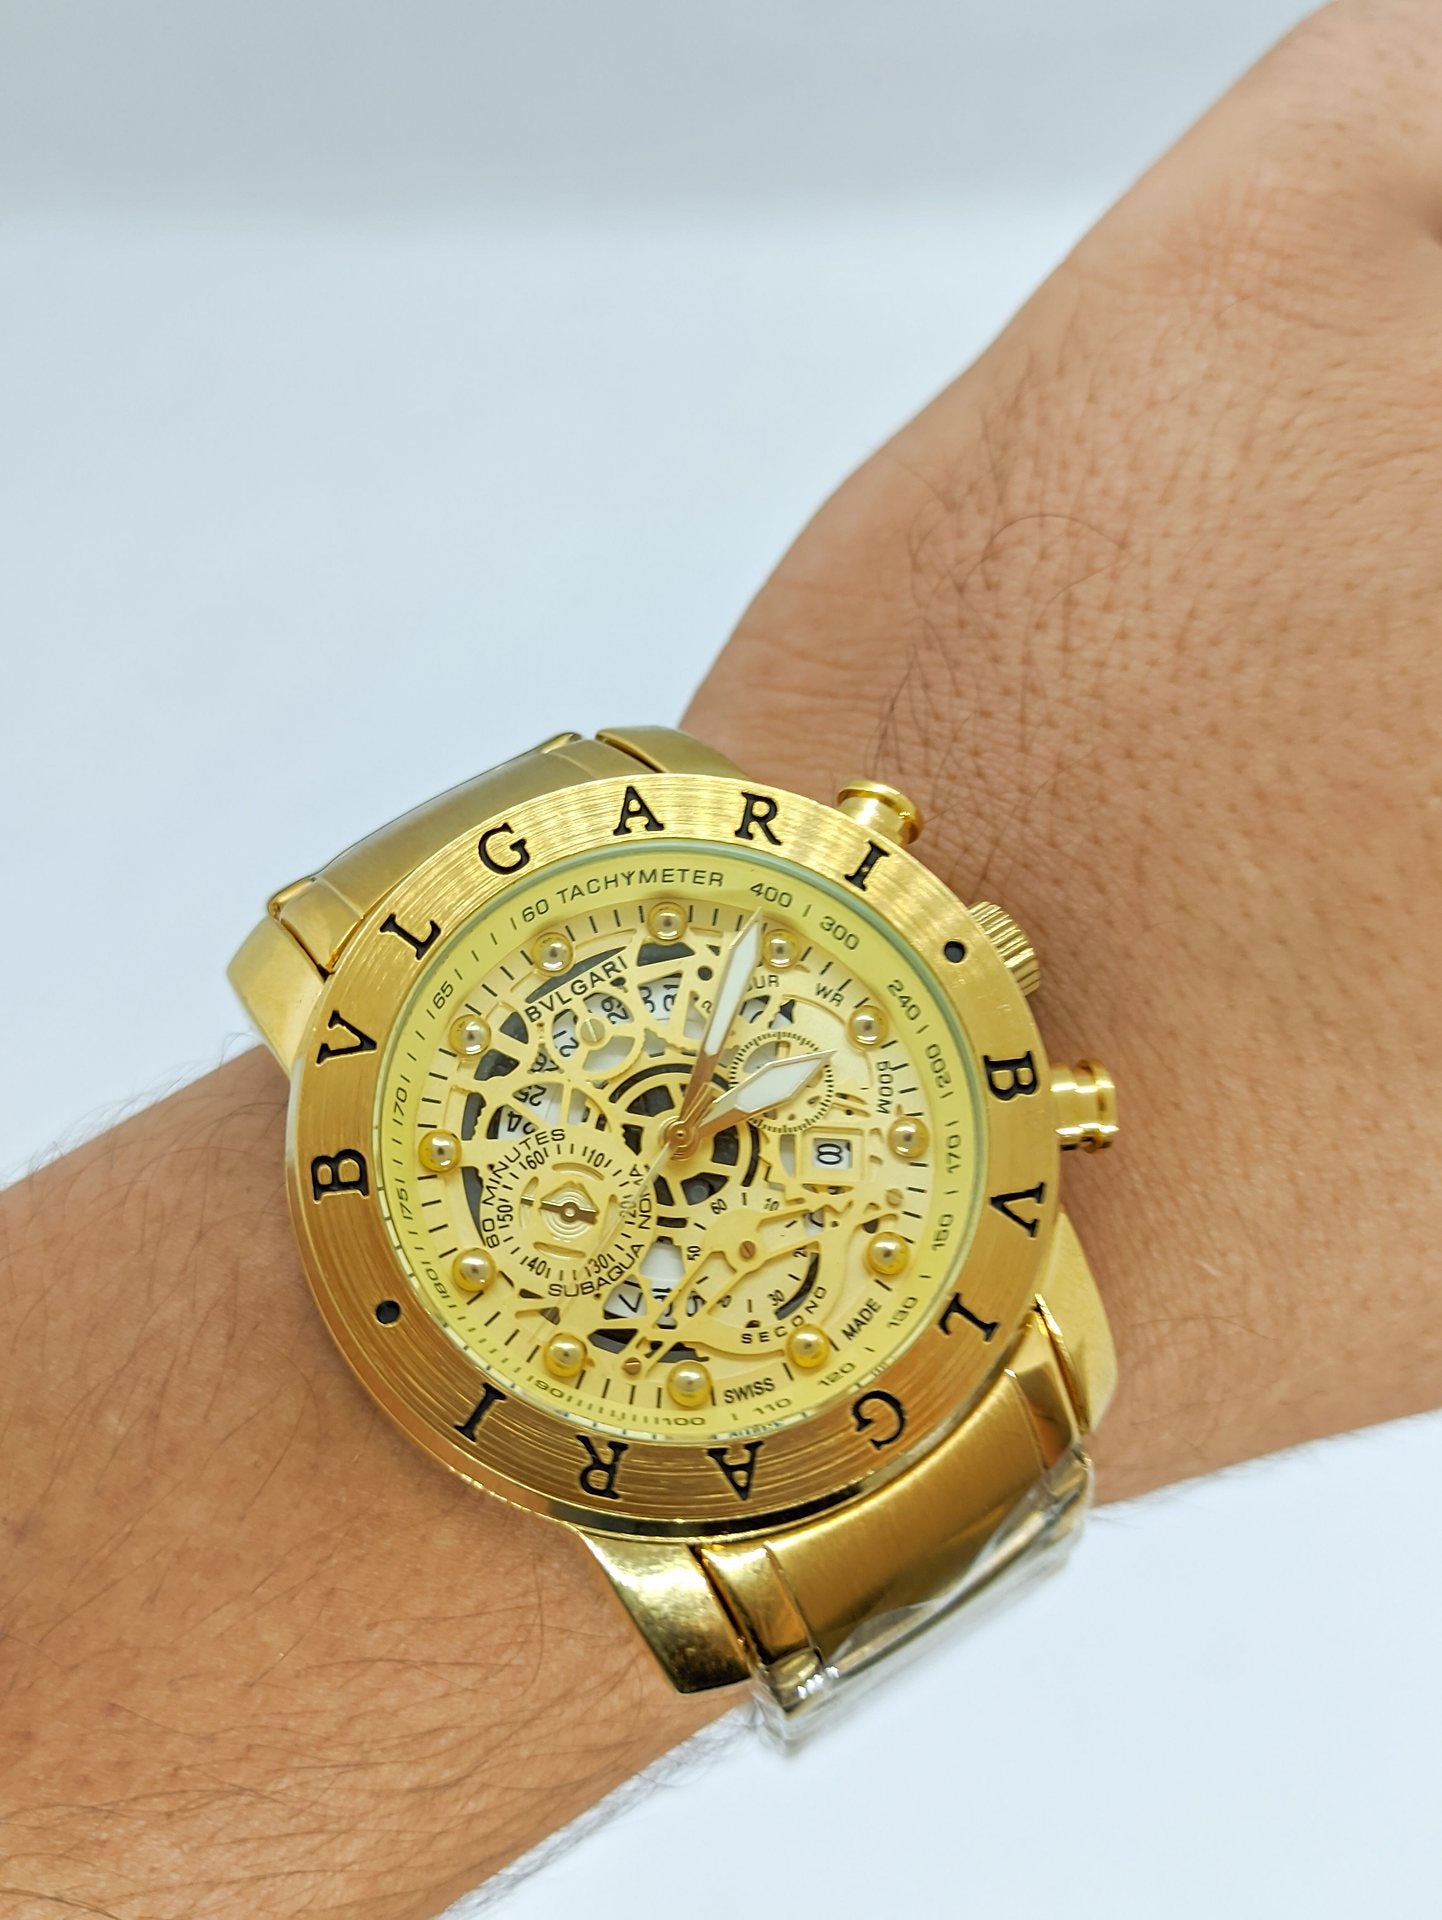 Relógio Skeleton Dourado - C/ Caixa Premium